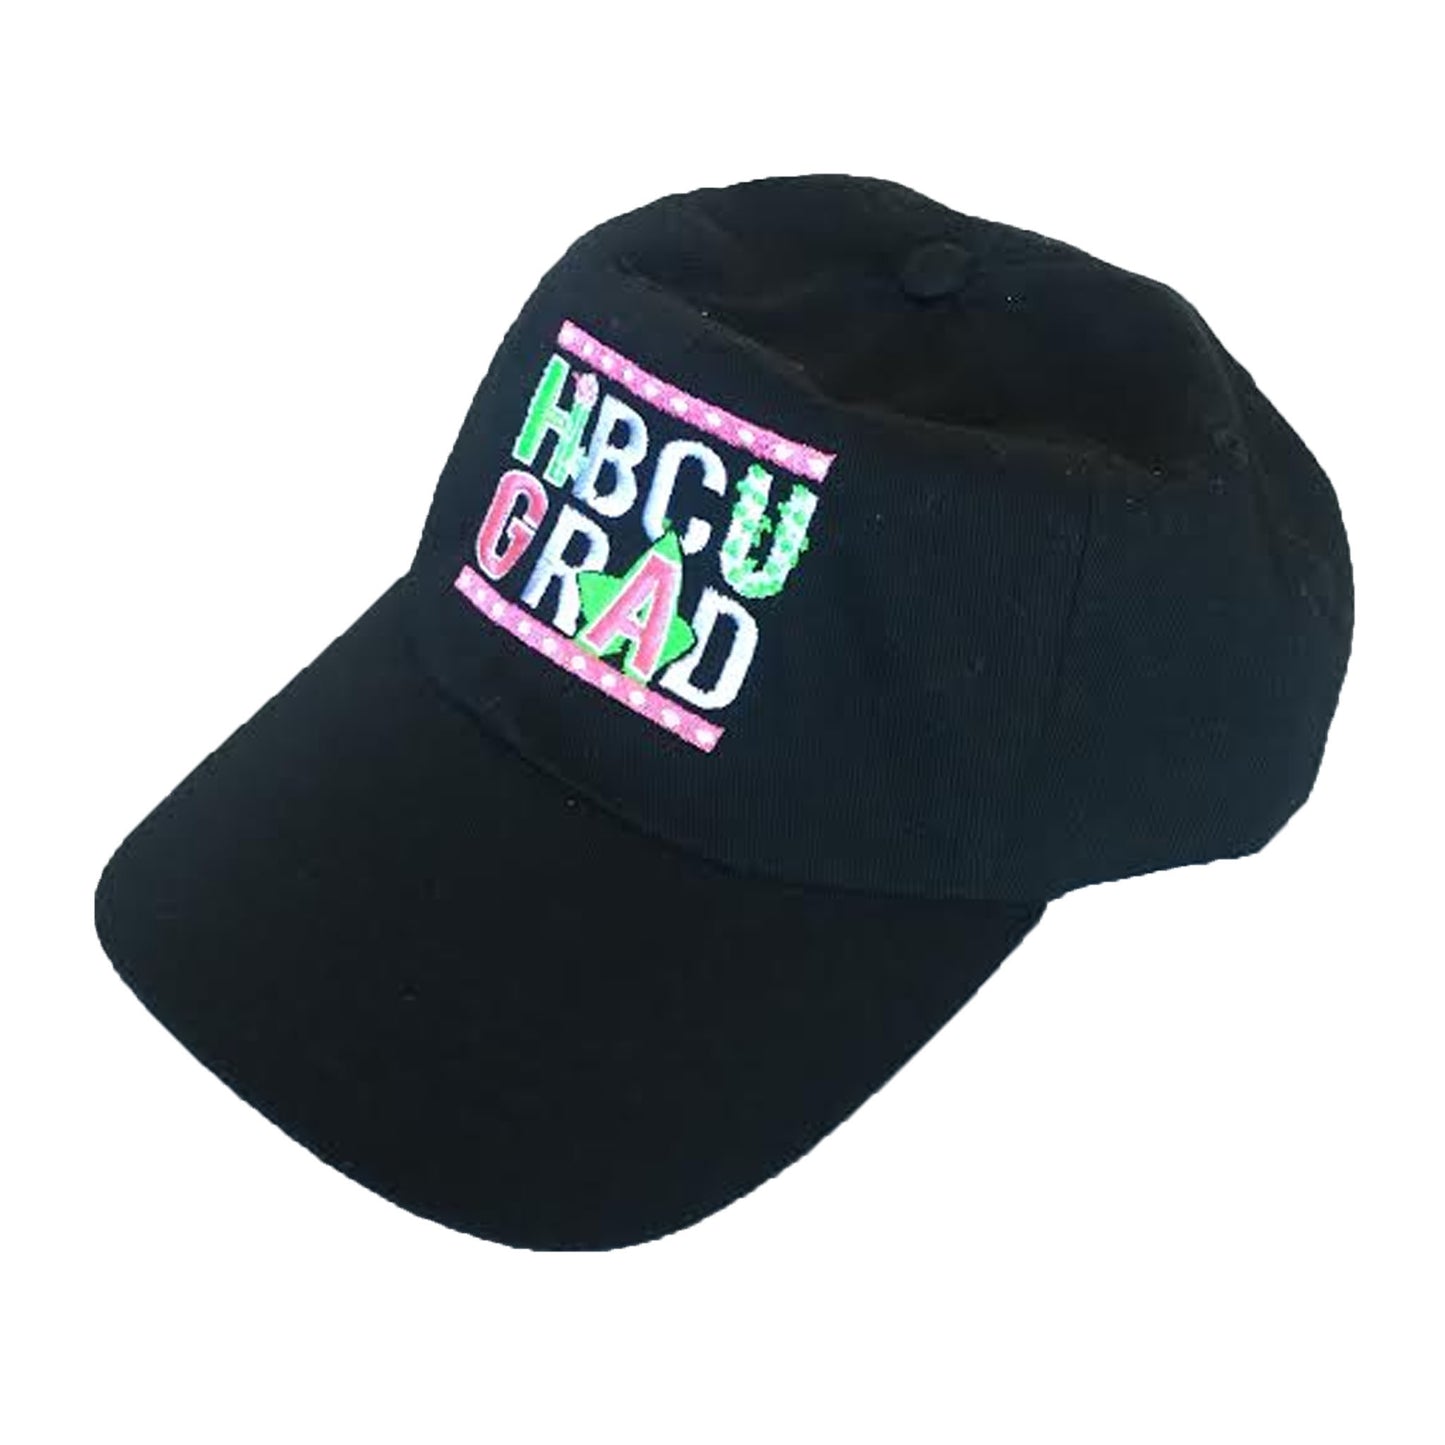 HBCU Grad | Pearl Edition | Low Profile Cap - Black